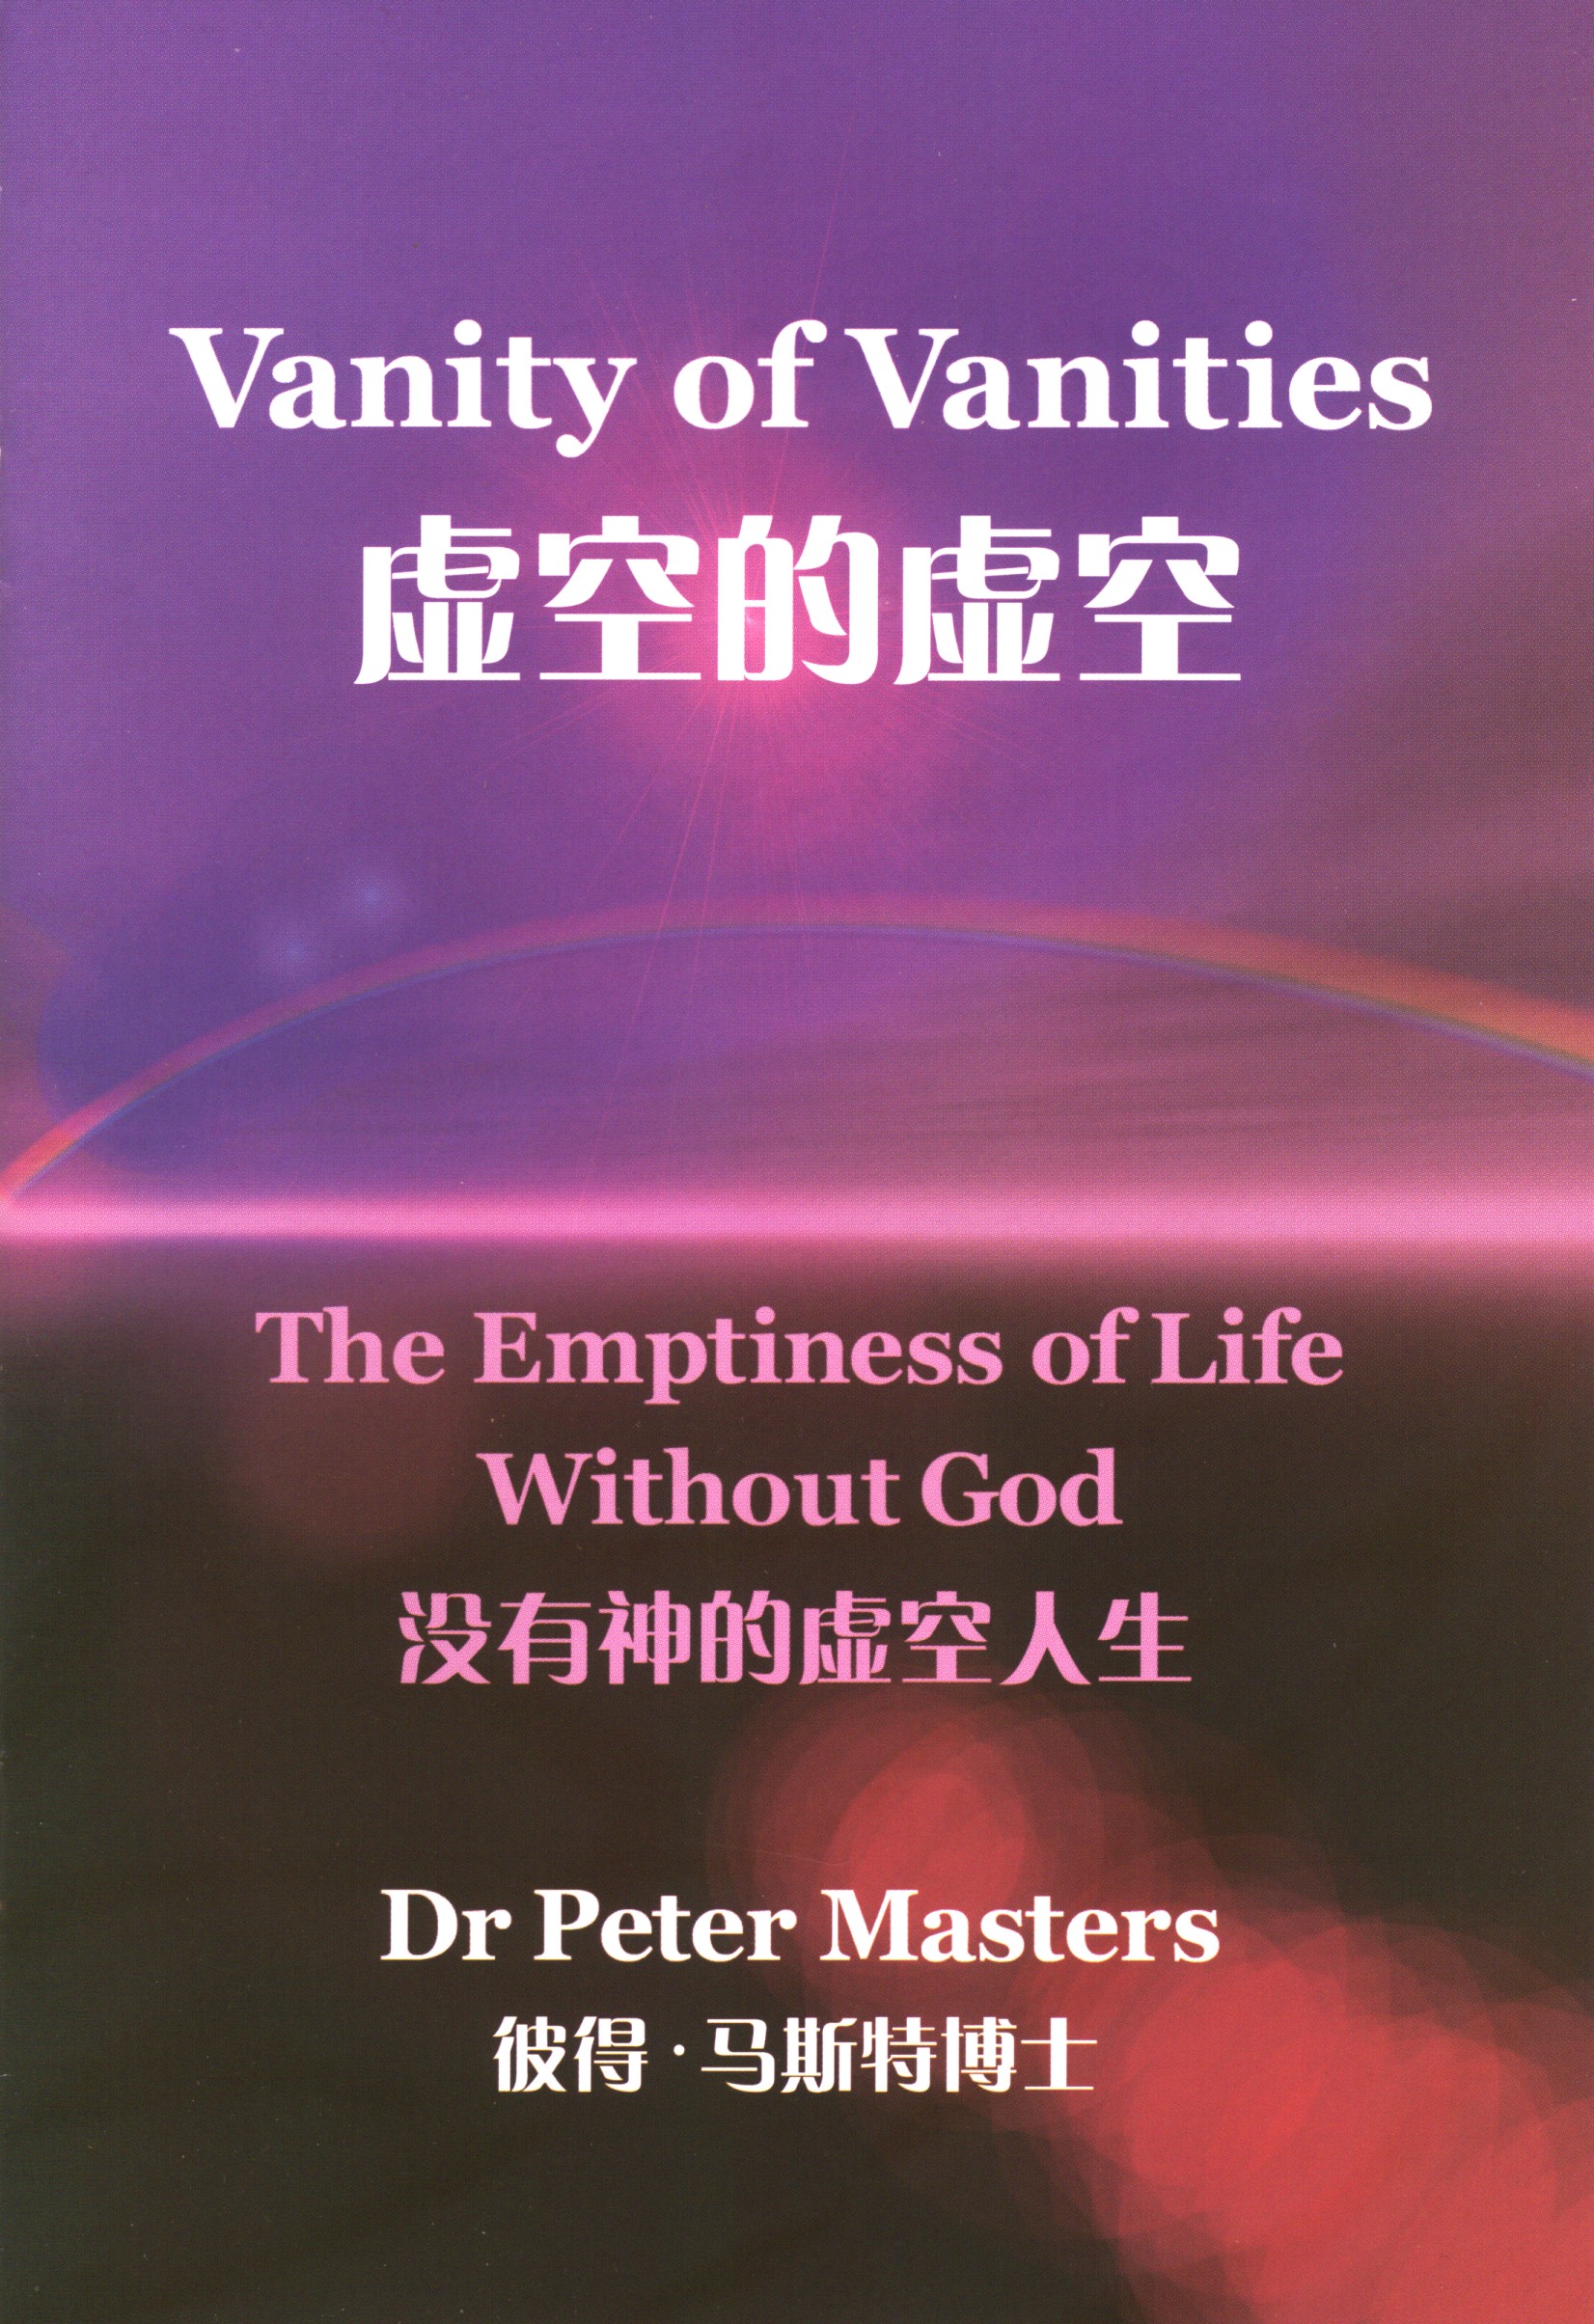 [Chinese simplified script and English] Vanity of Vanities